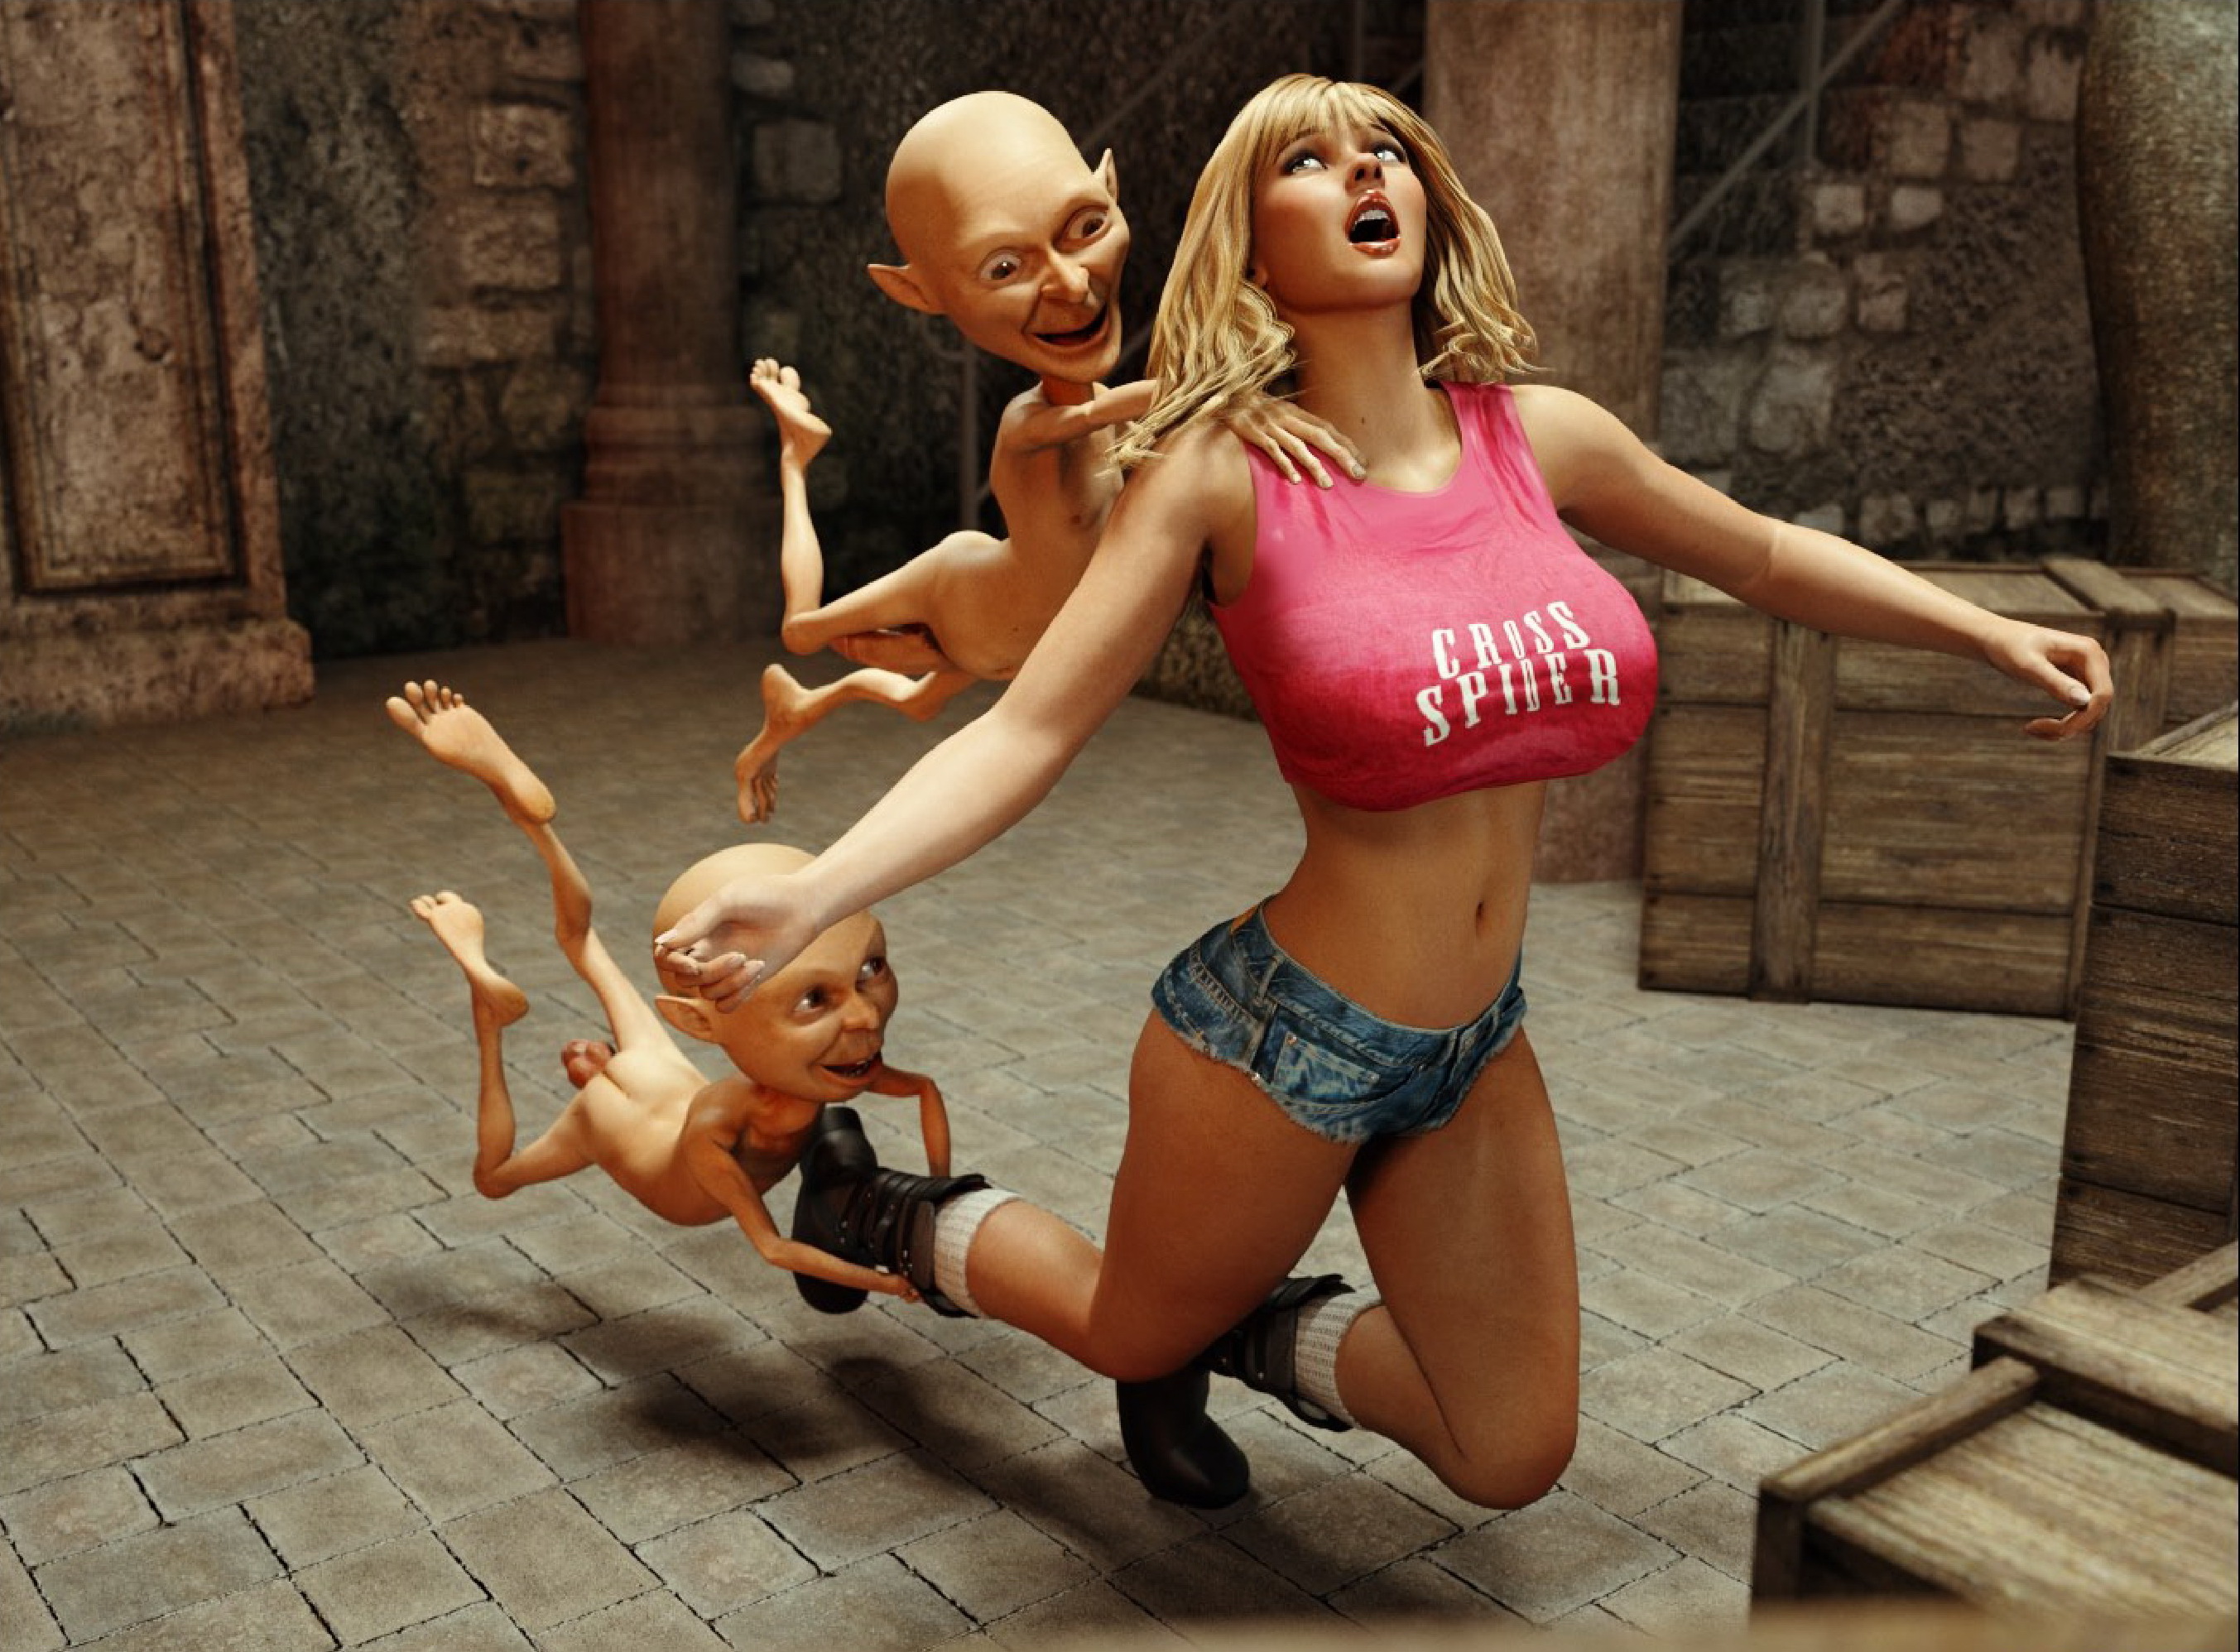 Evil 3d Porn Little Gobbler - Two evil little demons catch and defile gorgeous blonde in basement | Elf  raped by demons